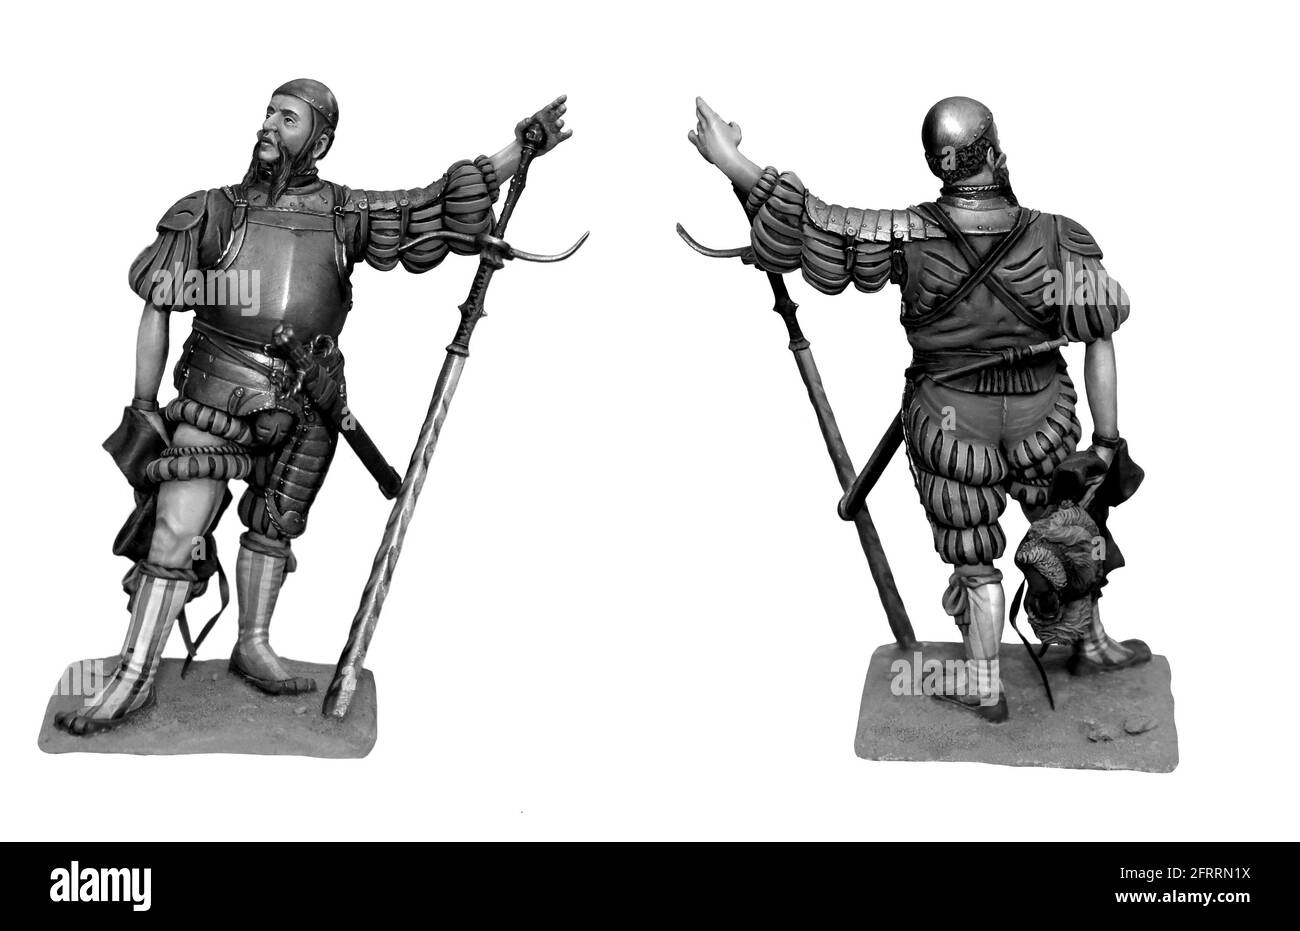 Landsknecht with longsword. Medieval soldier illustration. Medieval mercenary. Stock Photo